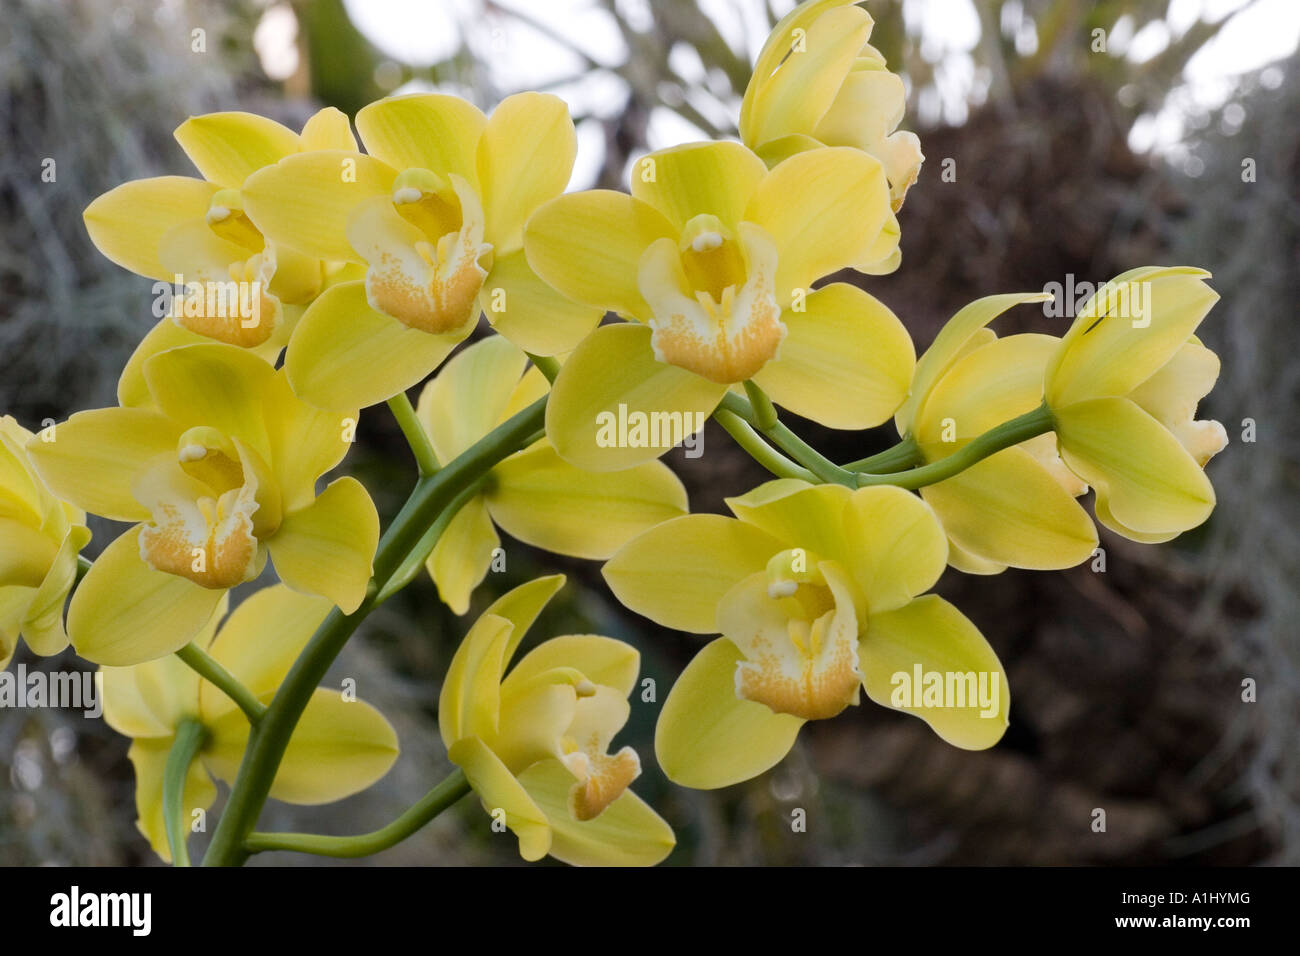 cymbidium one tree hill orchid Stock Photo